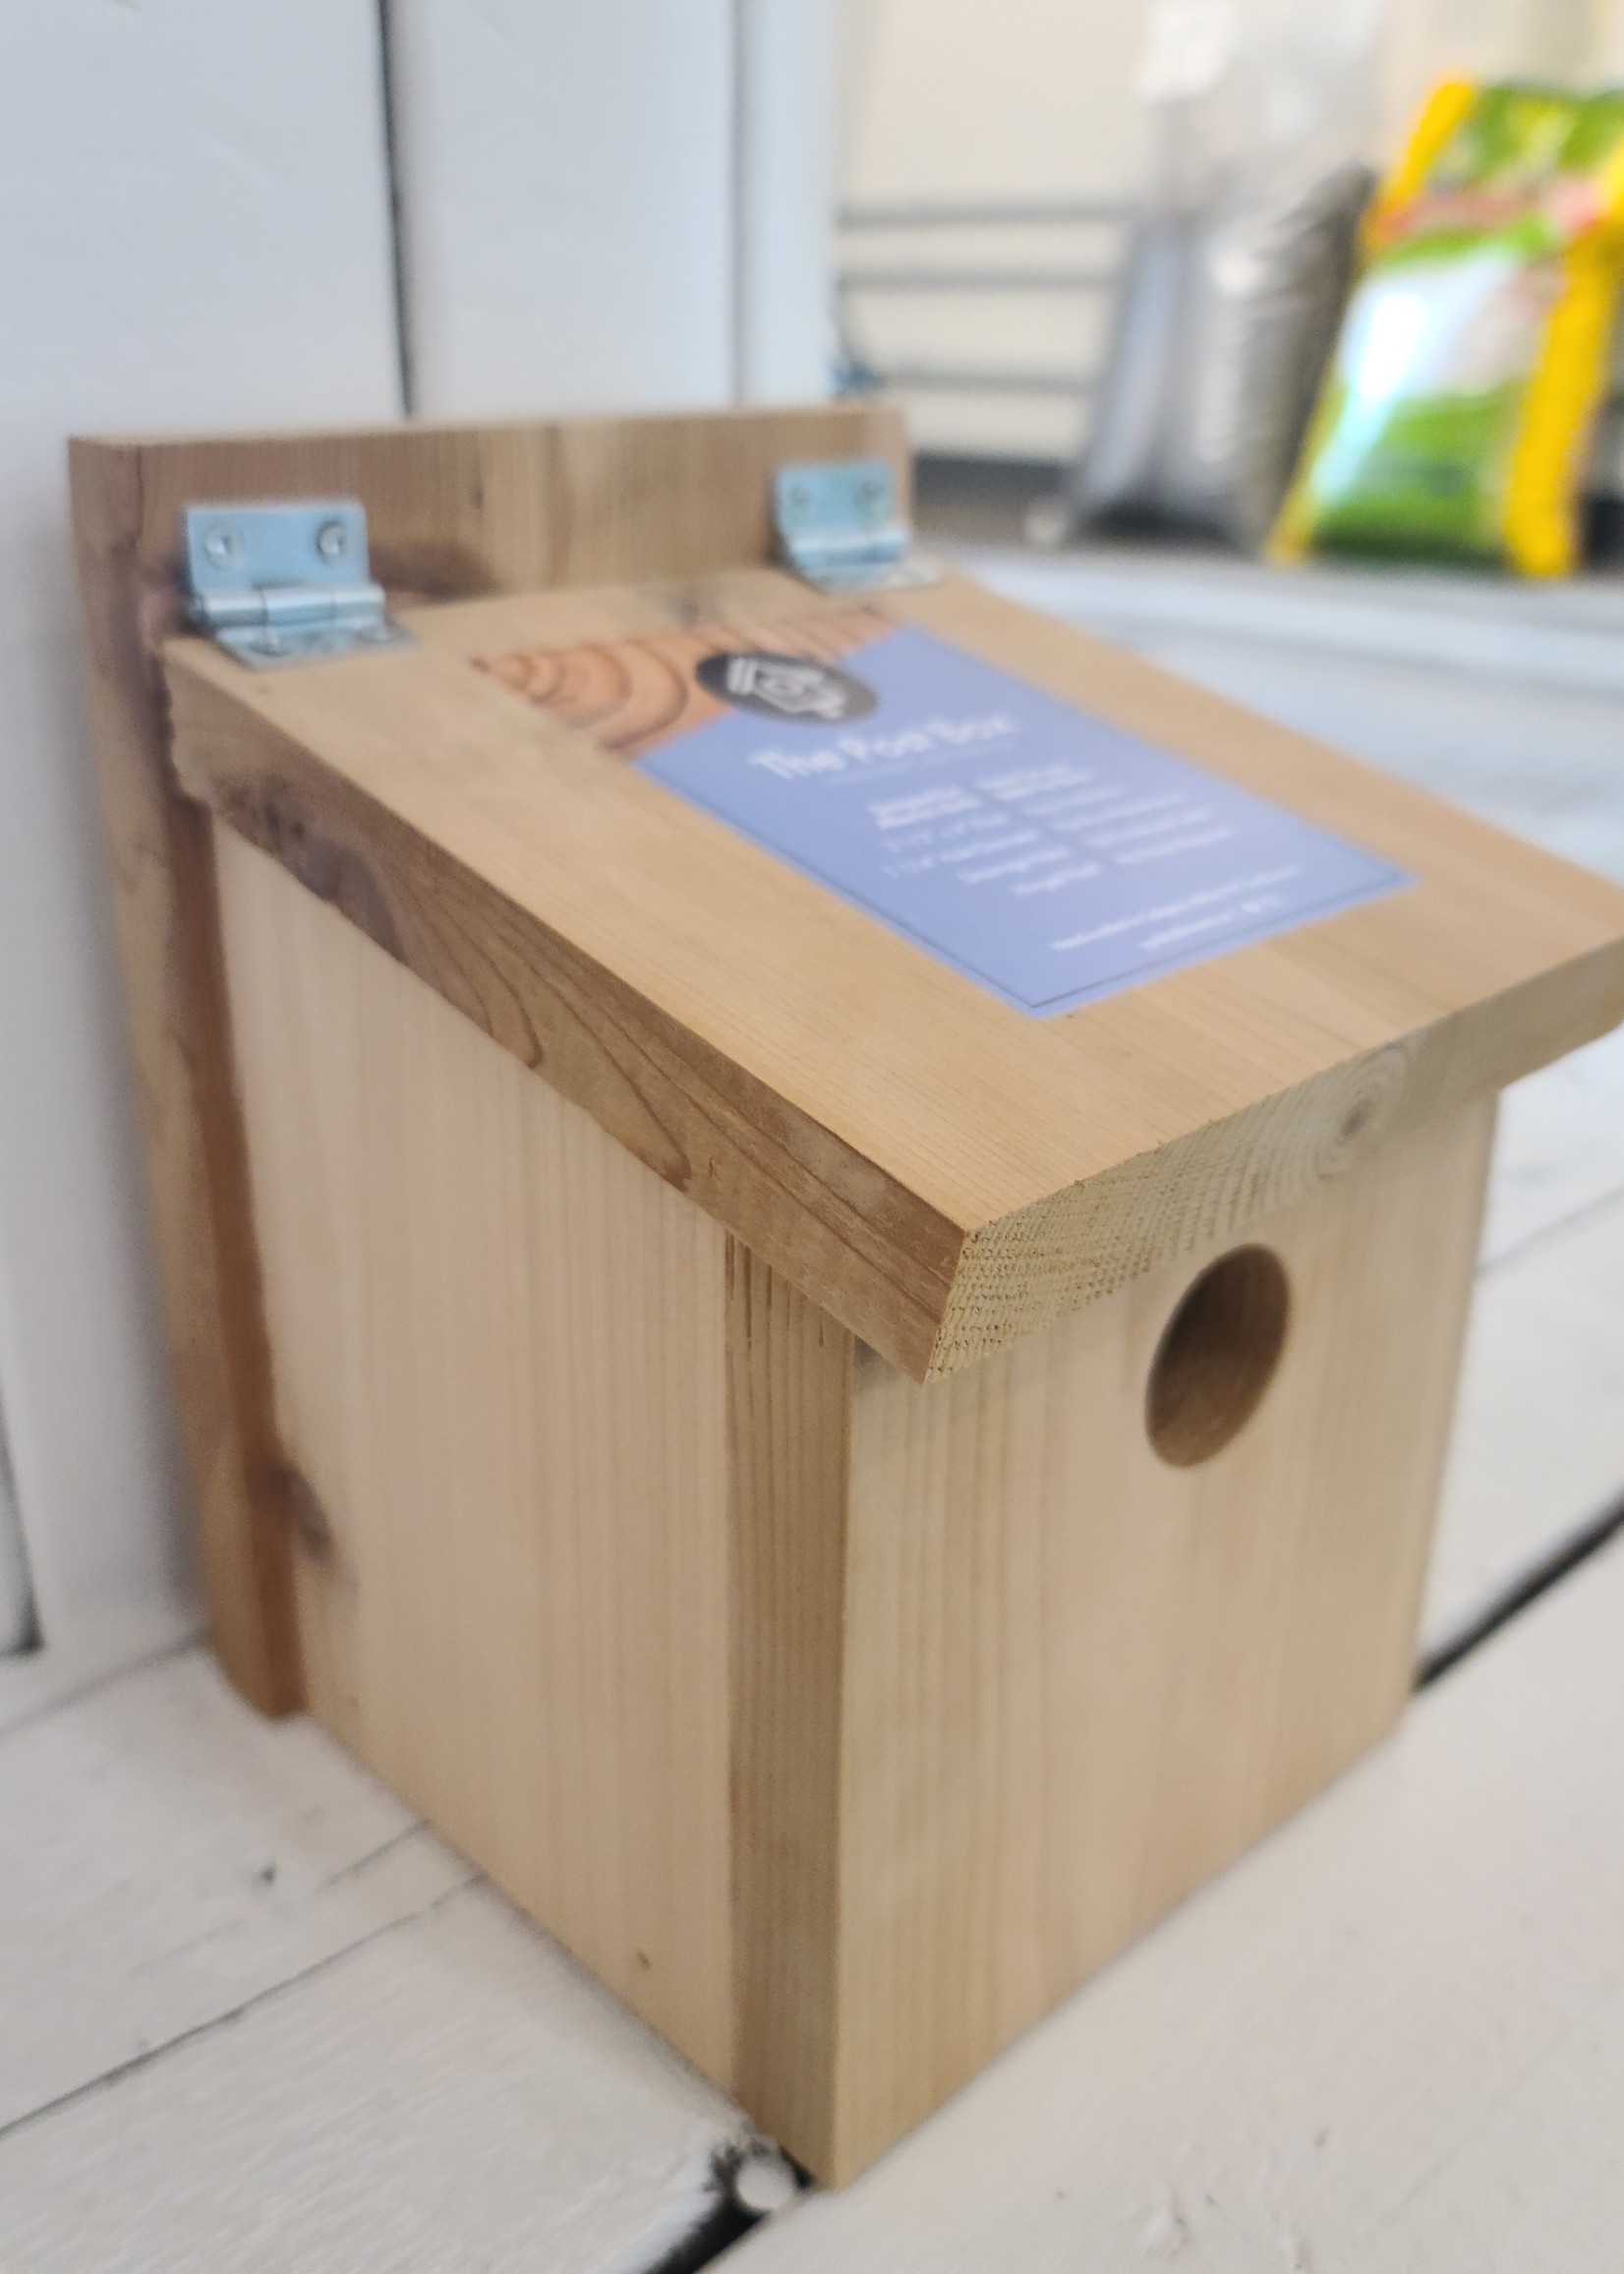 The Post Box Birdhouse